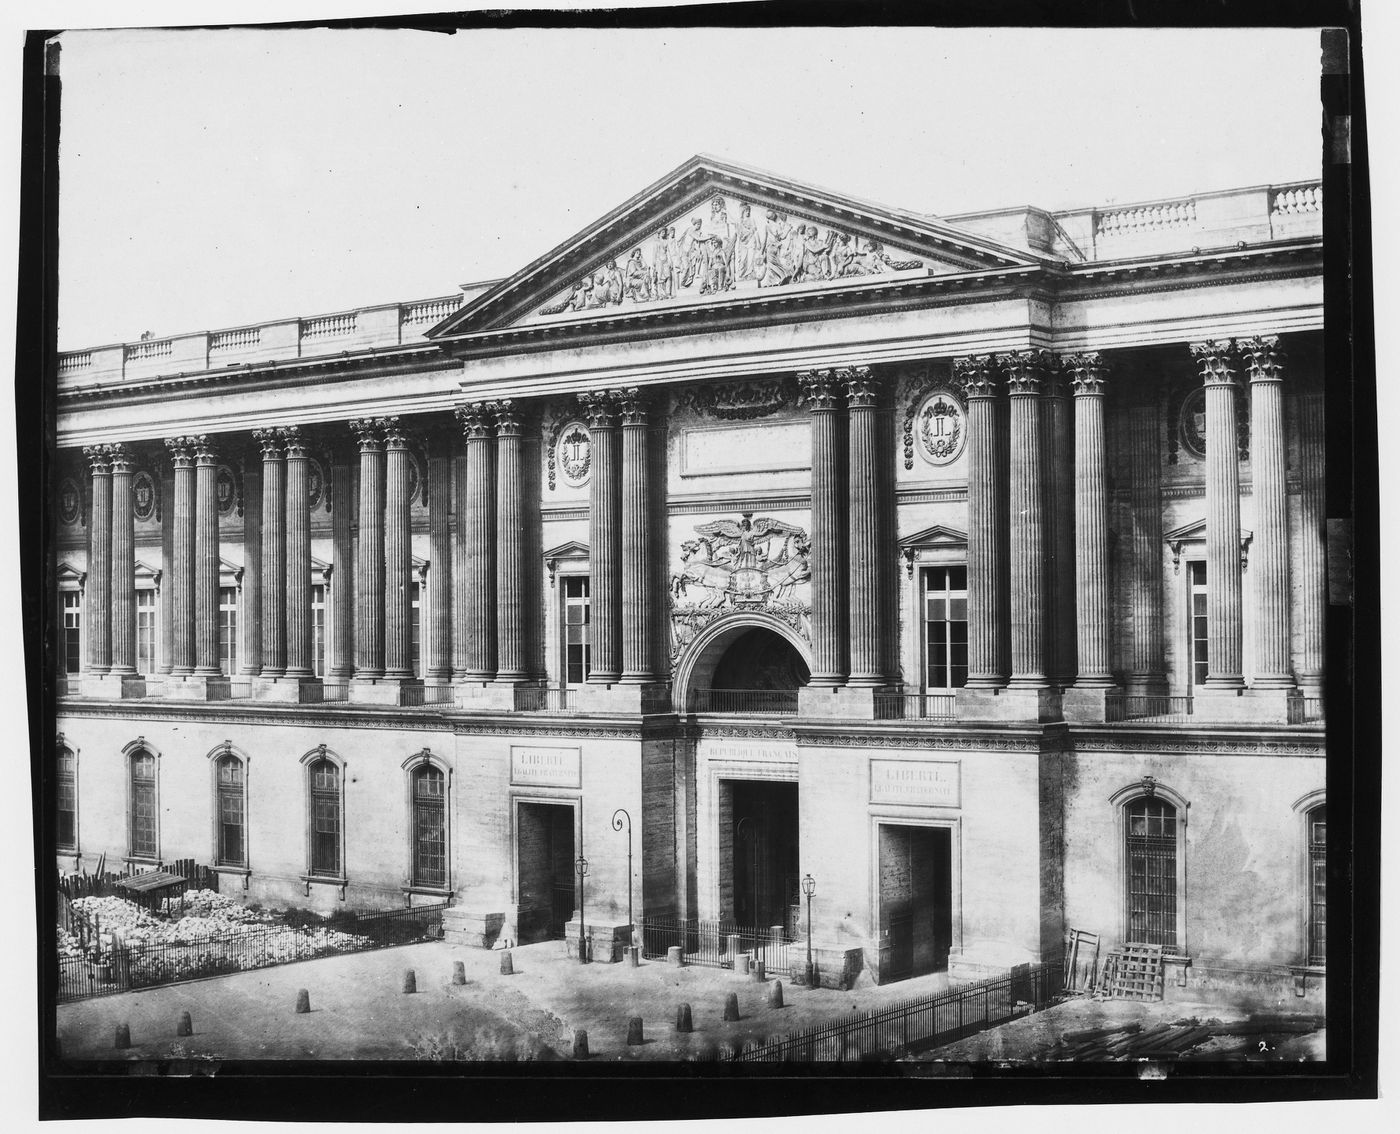 View of the Louvre, Paris